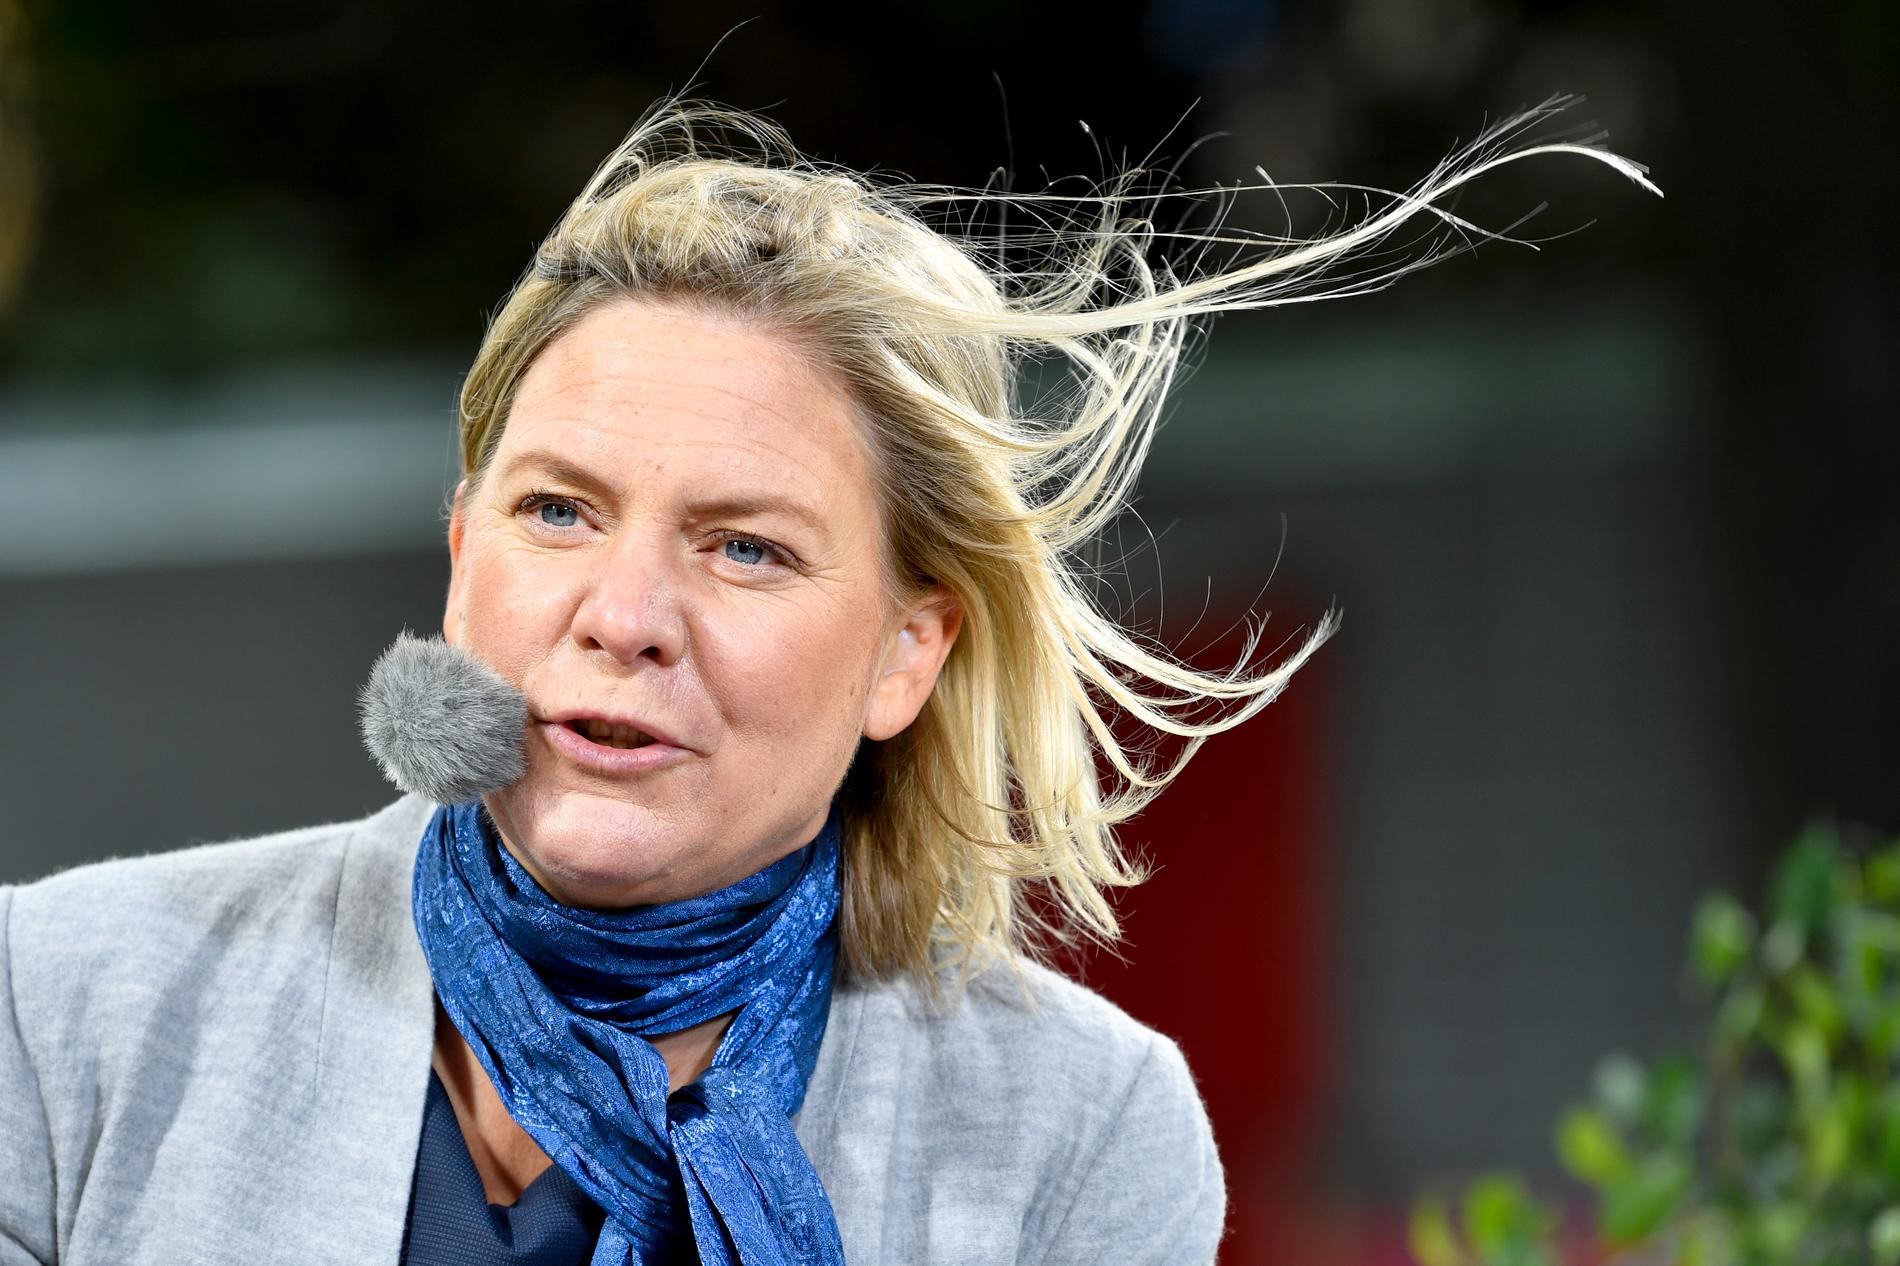 Finansminister Magdalena Andersson (S) under Socialdemokraternas dag på politikerveckan i Almedalen.